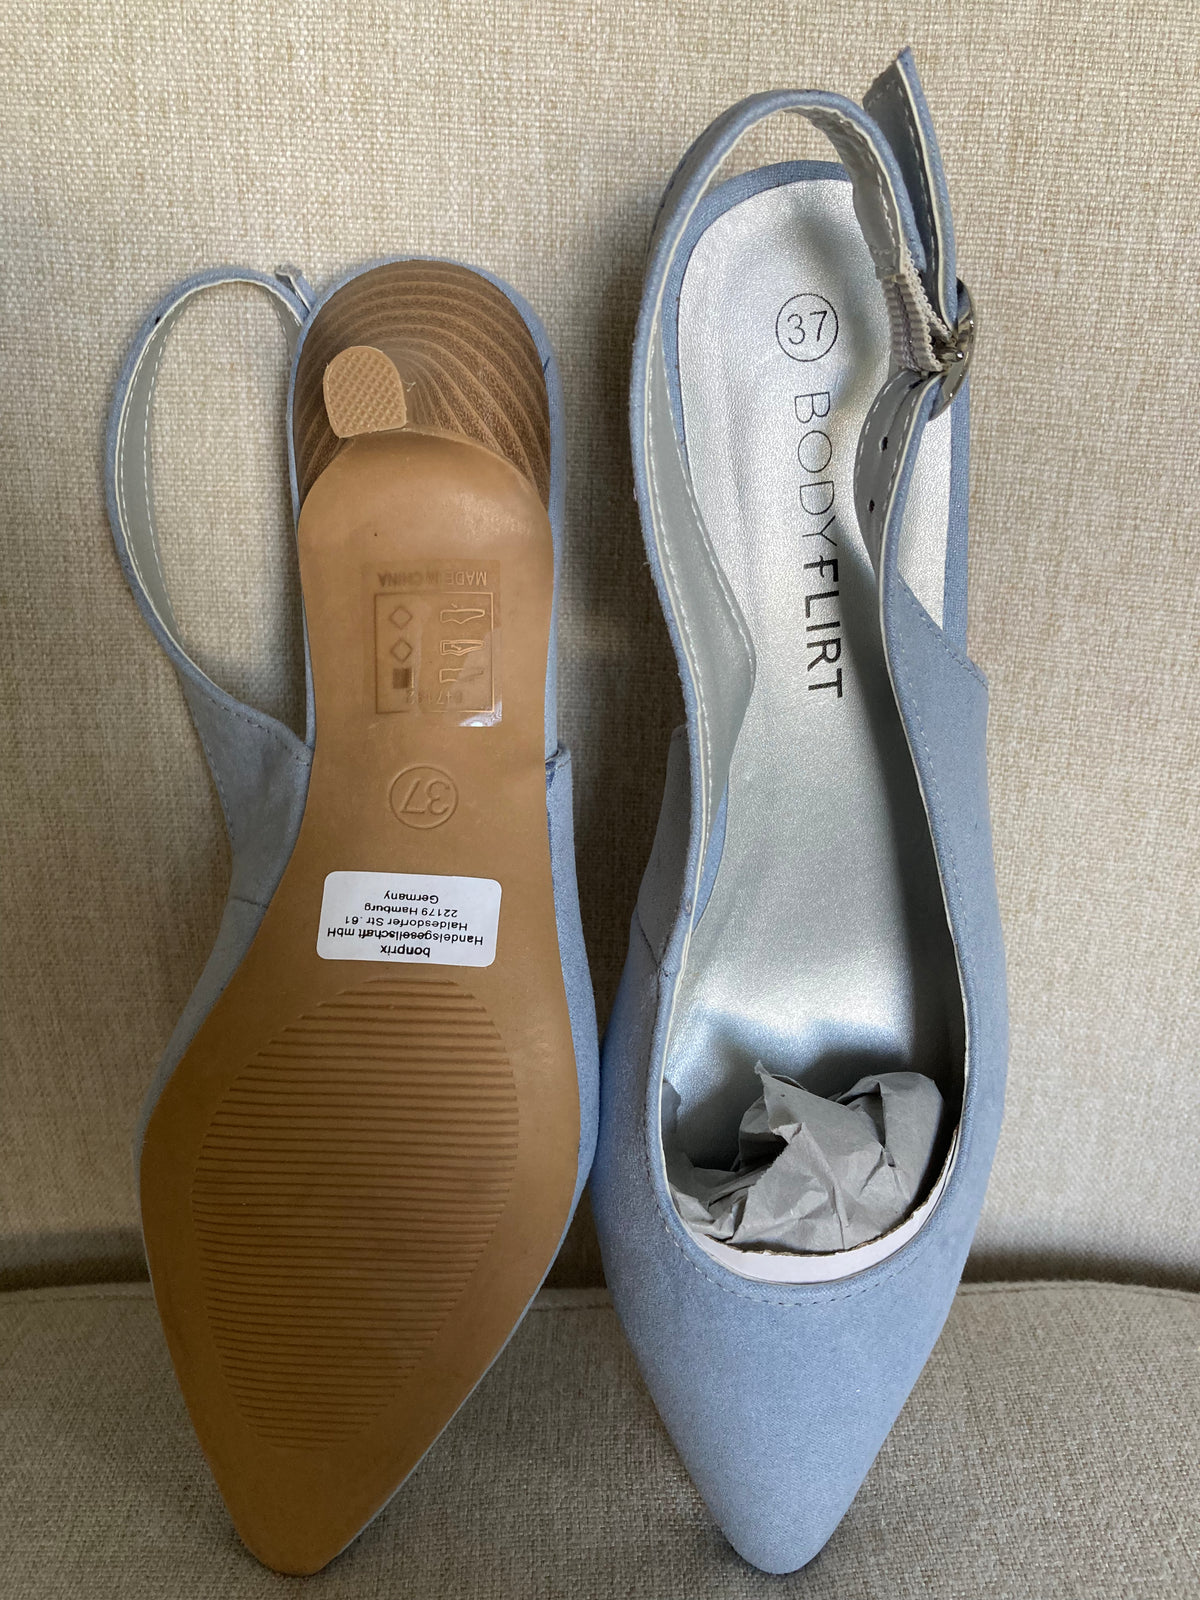 Pale blue heels size 4 uk By BPC